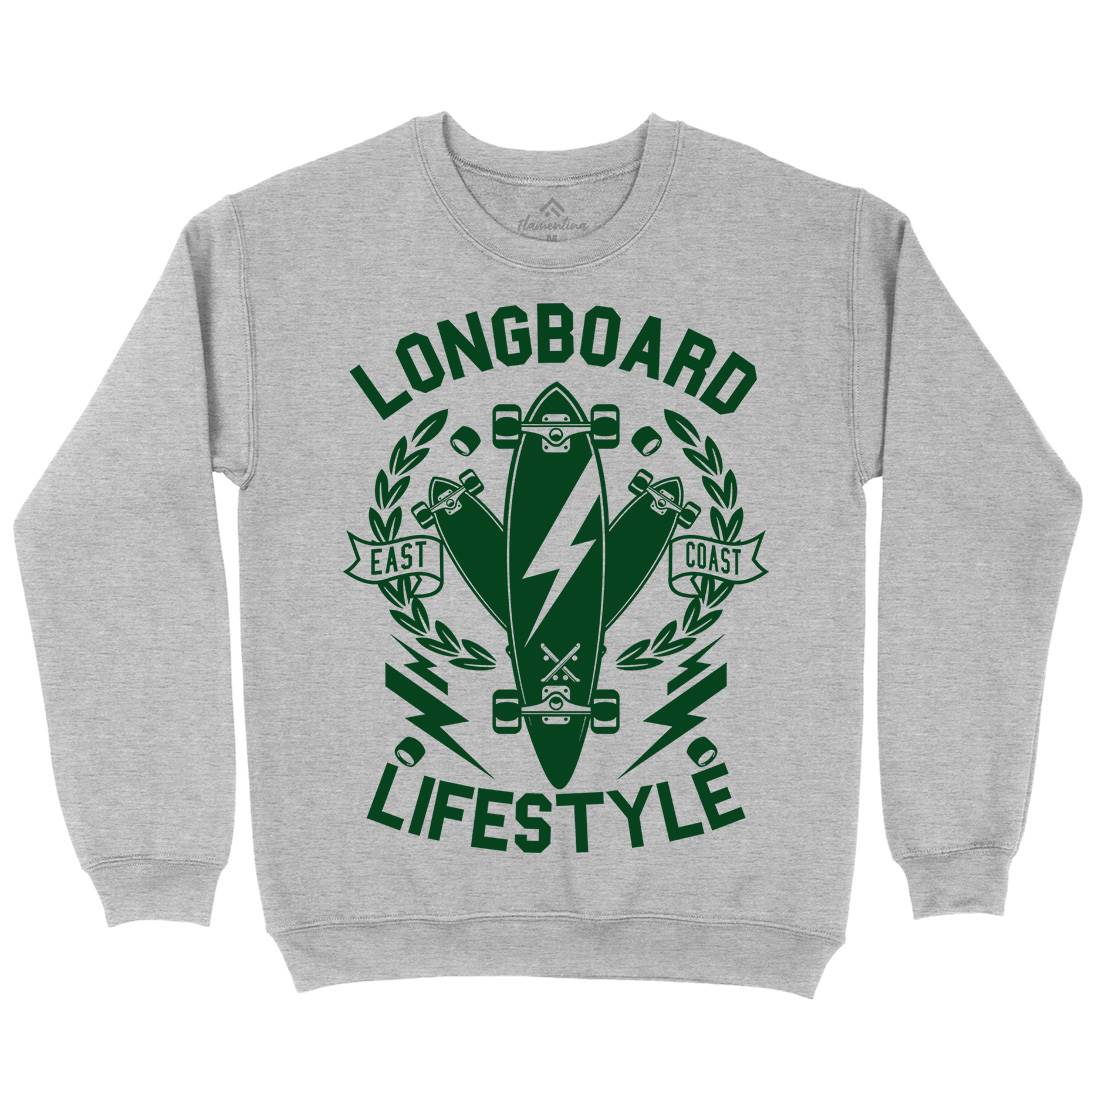 Longboard Lifestyle Kids Crew Neck Sweatshirt Skate A251